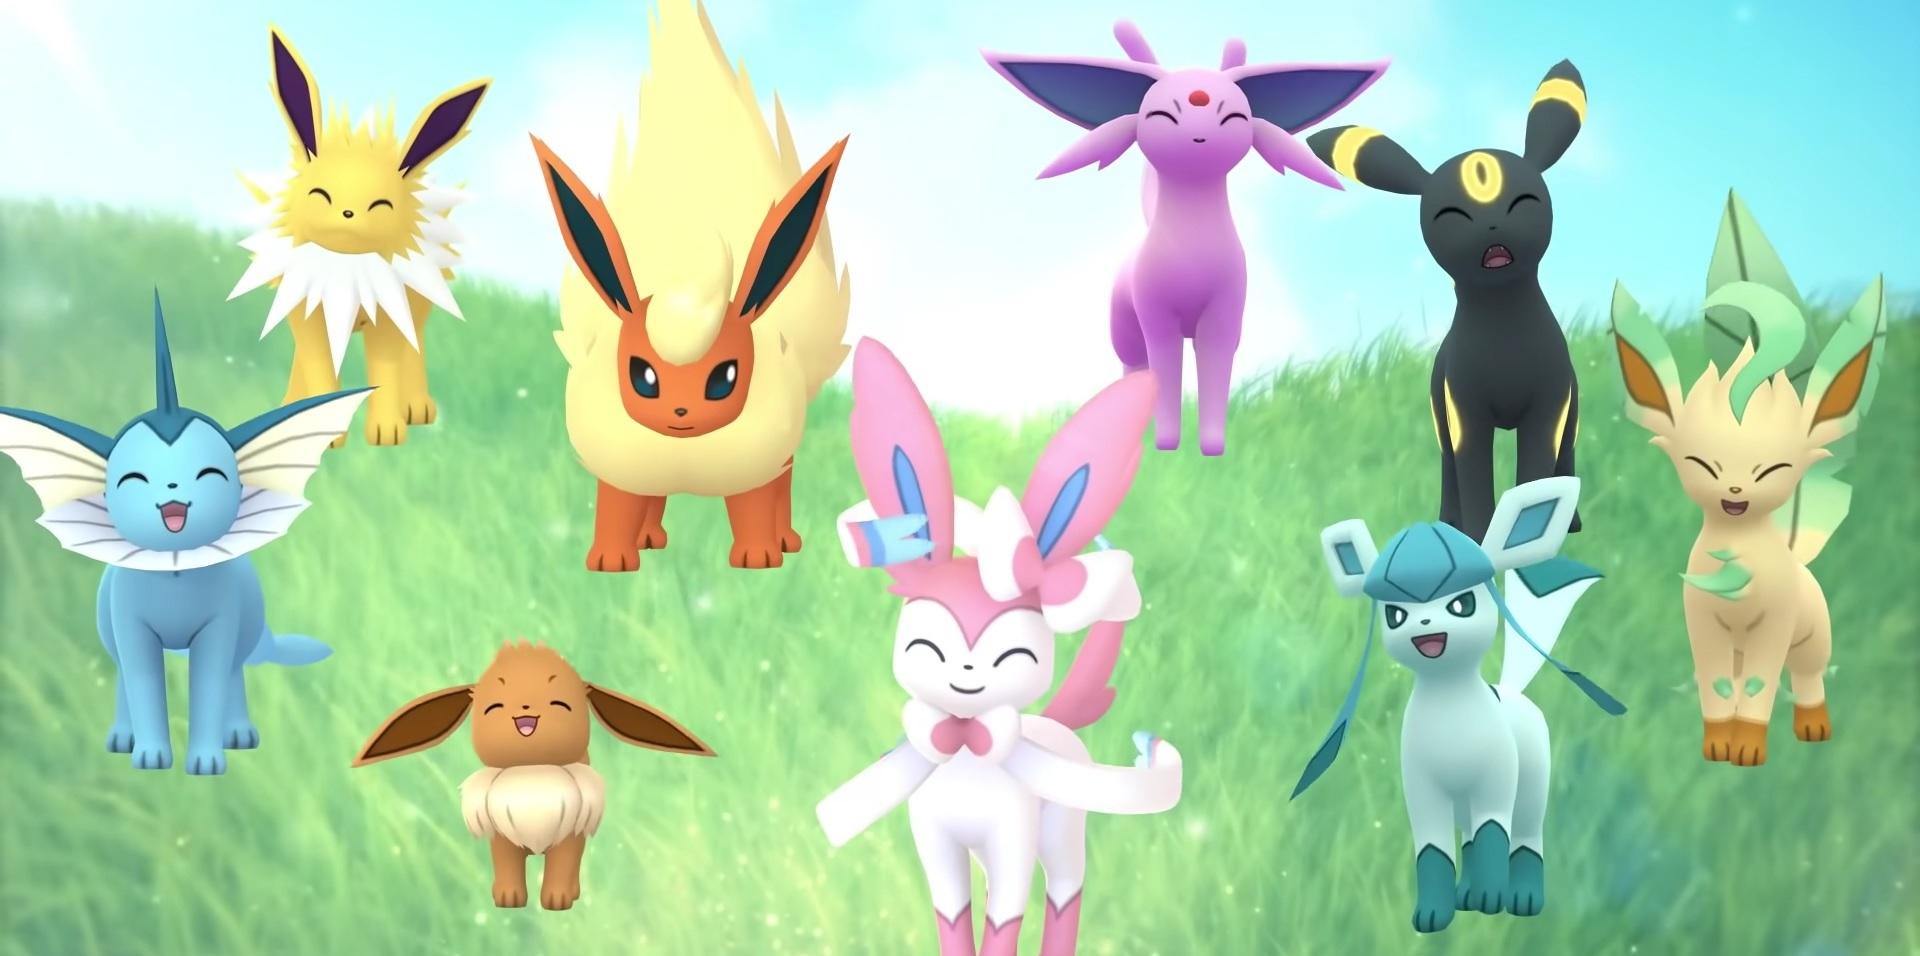 Shiny Pokemon GO Eevee, Evolutions, And The Rarest Shiny Pokemon